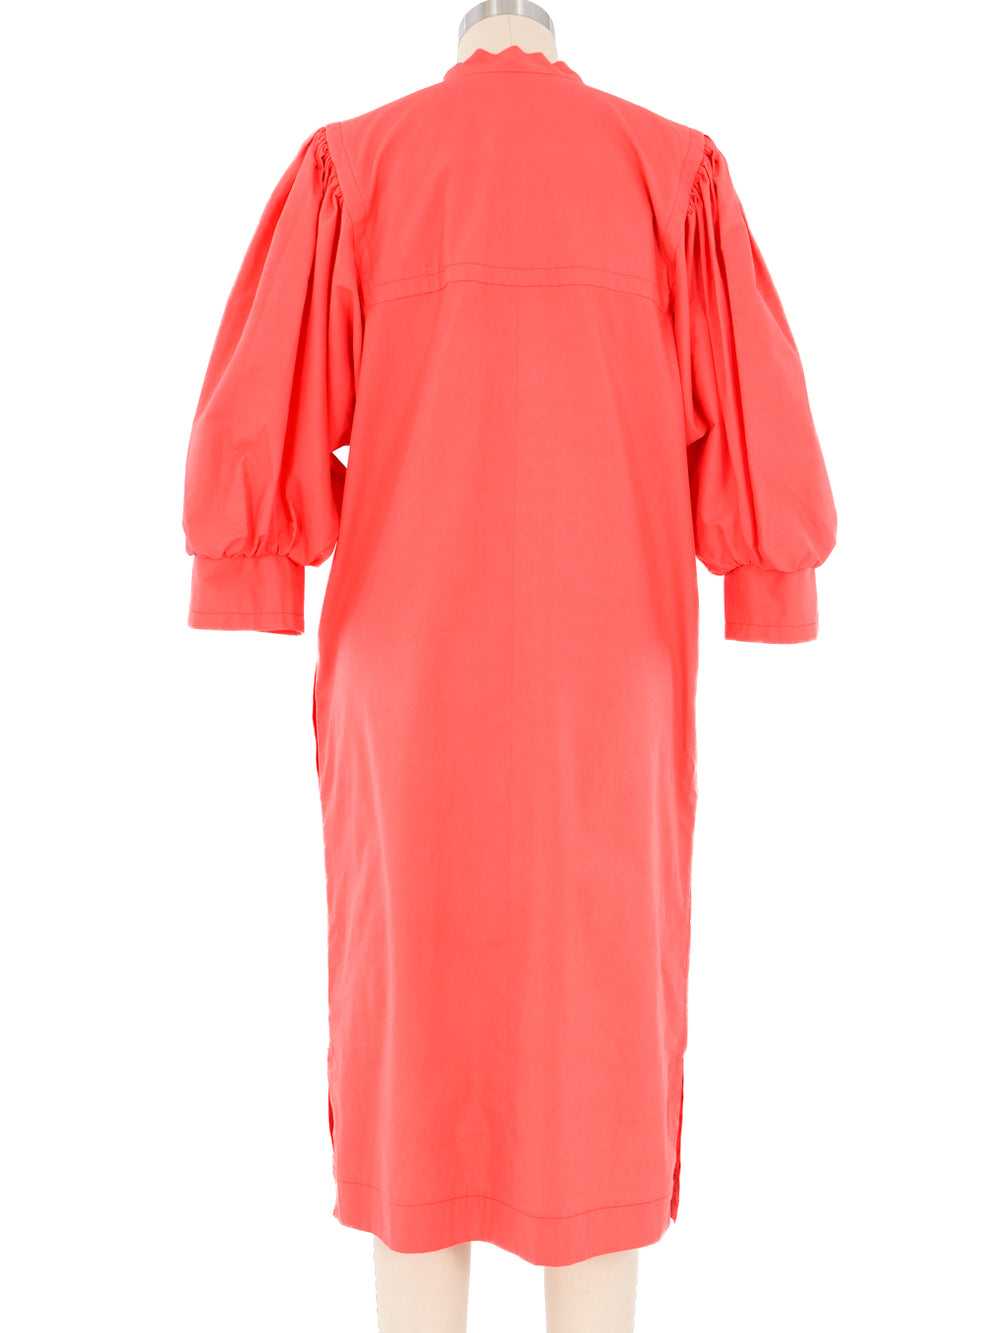 Yves Saint Laurent Coral Puff Sleeve Dress - image 4